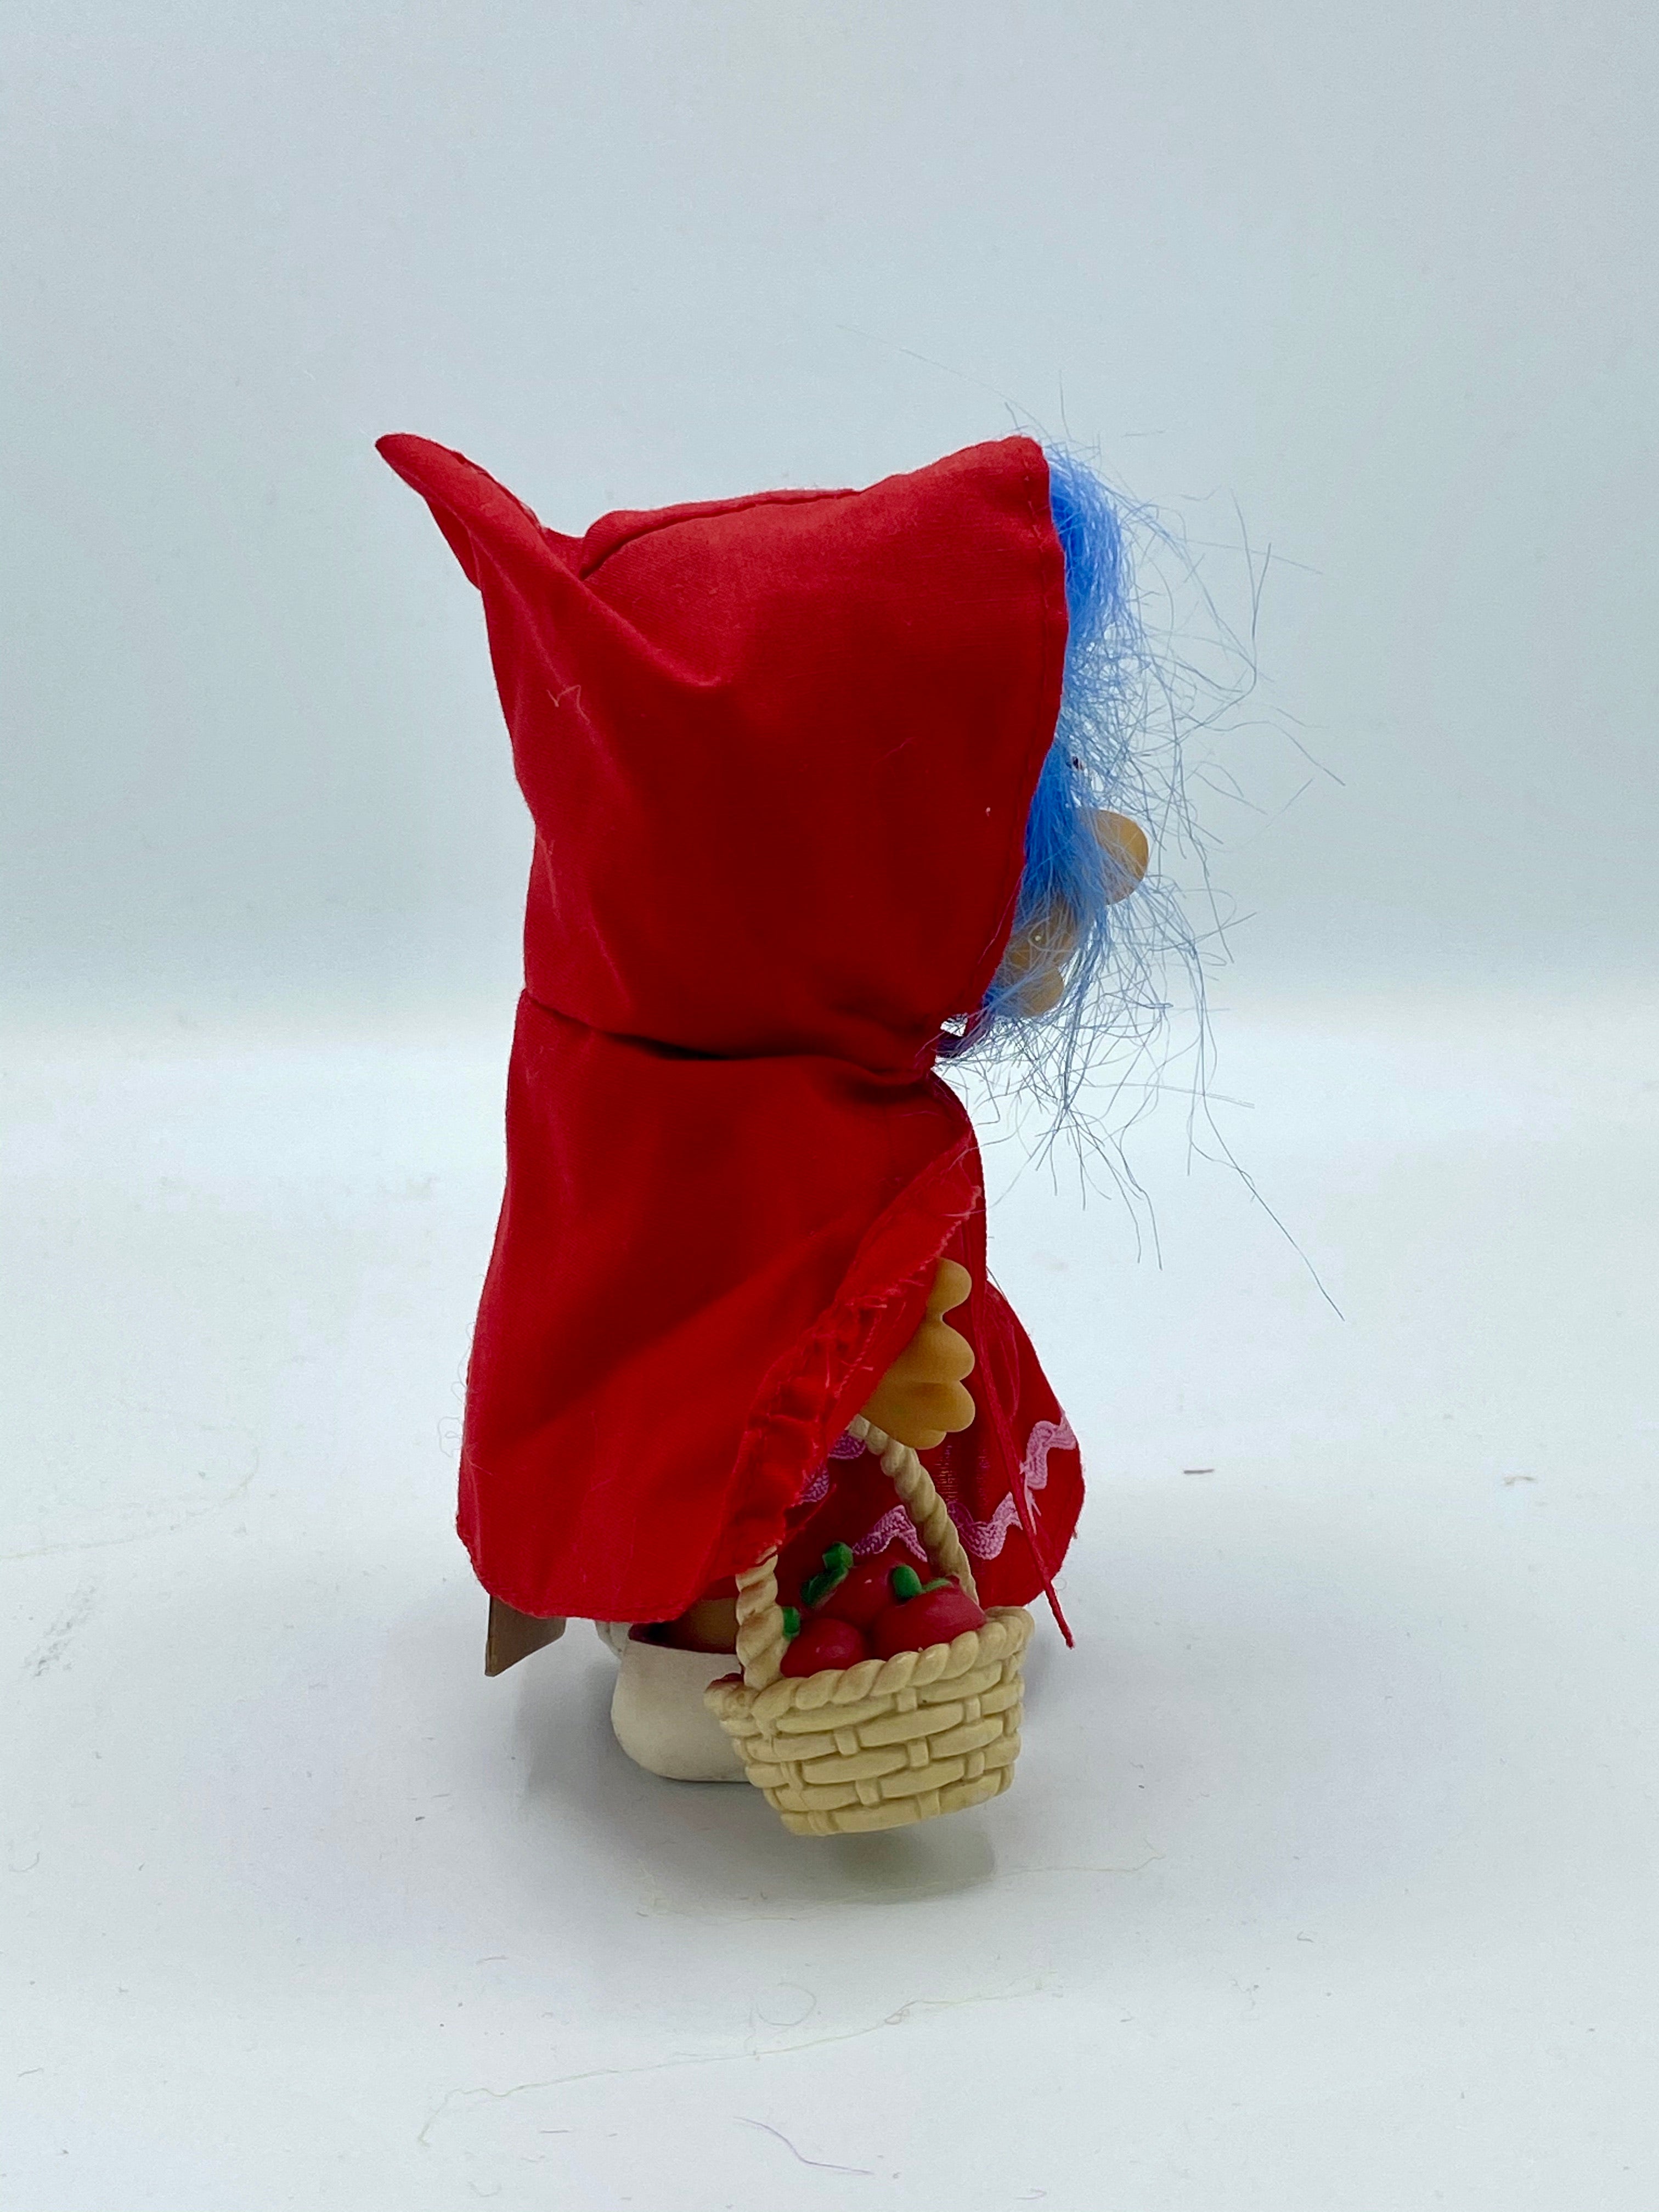 Red Riding Hood Troll Doll